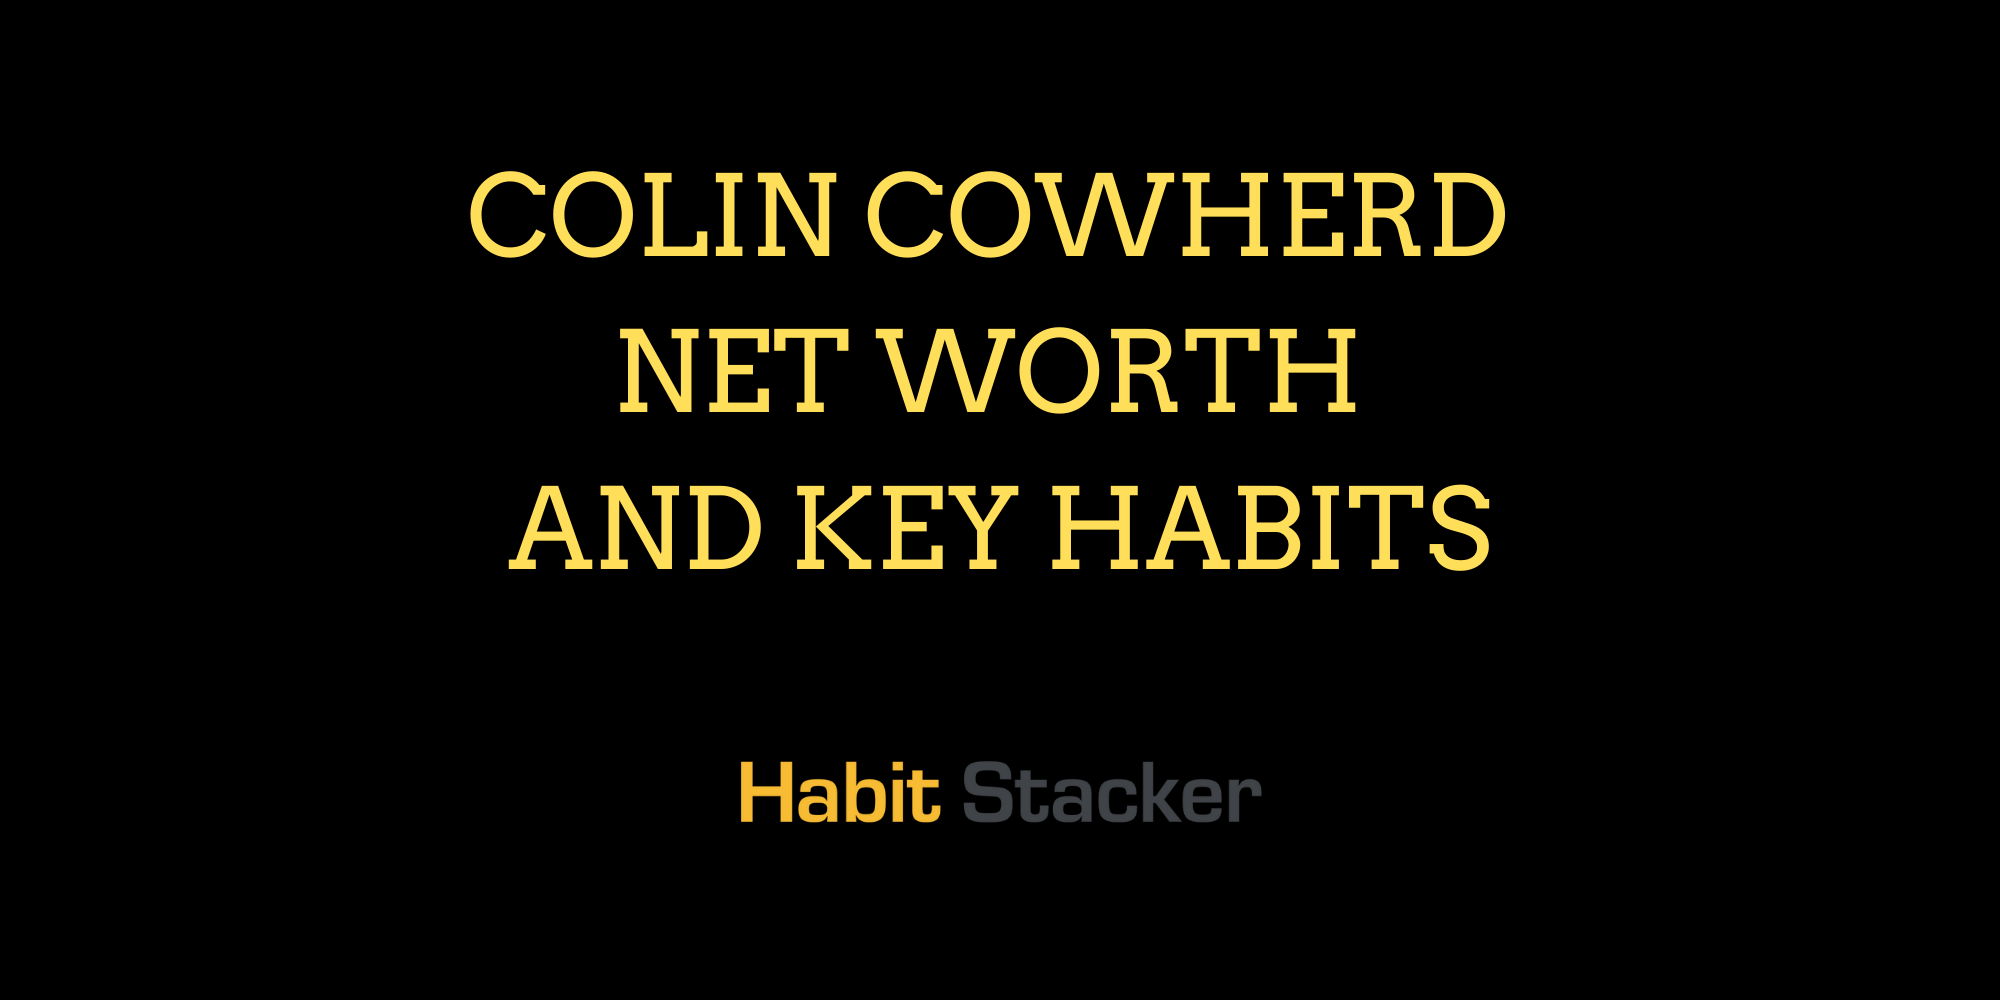 Colin Cowherd Net Worth and Key Habits